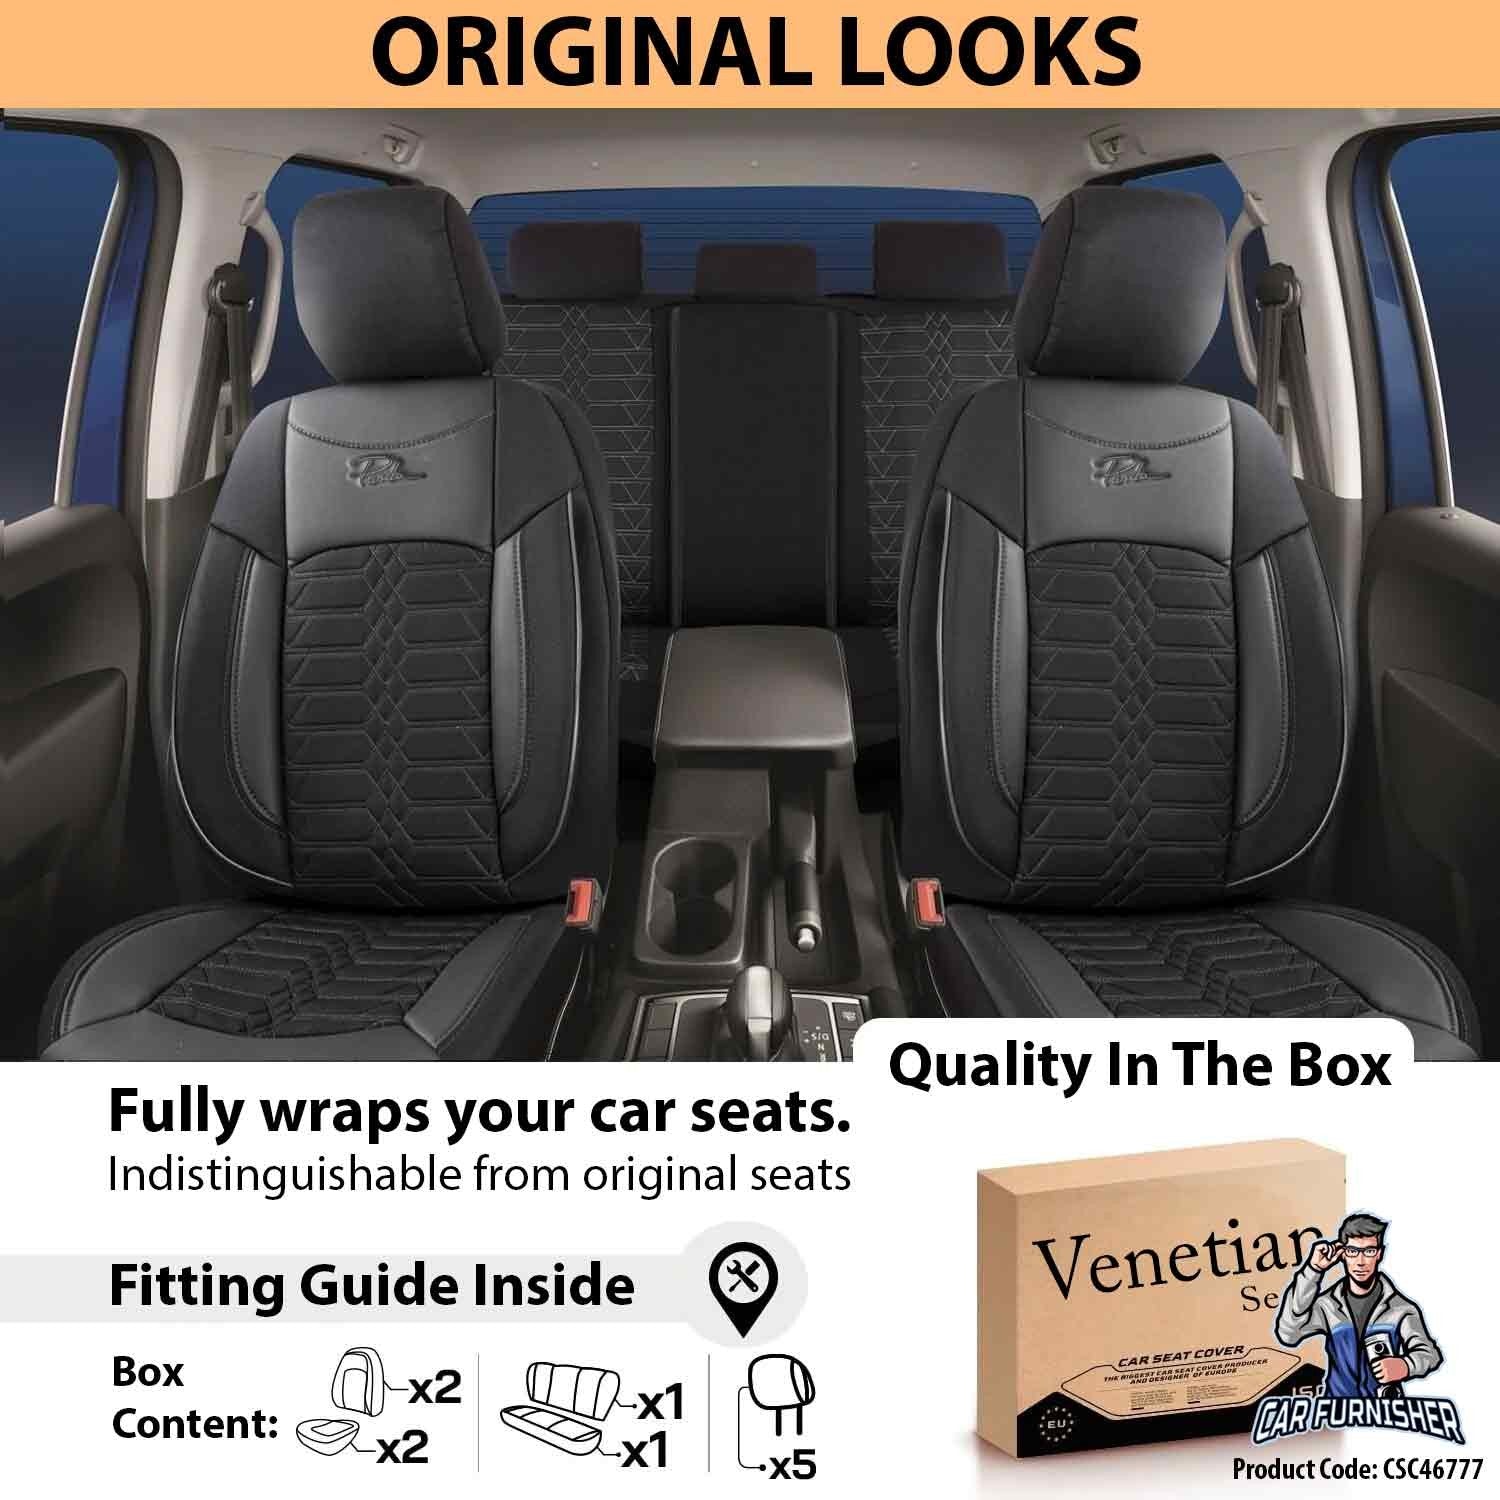 Luxury Car Seat Cover Set (5 Colors) | Venetian Series Black 5 Seats + Headrests (Full Set) Leather & Fabric